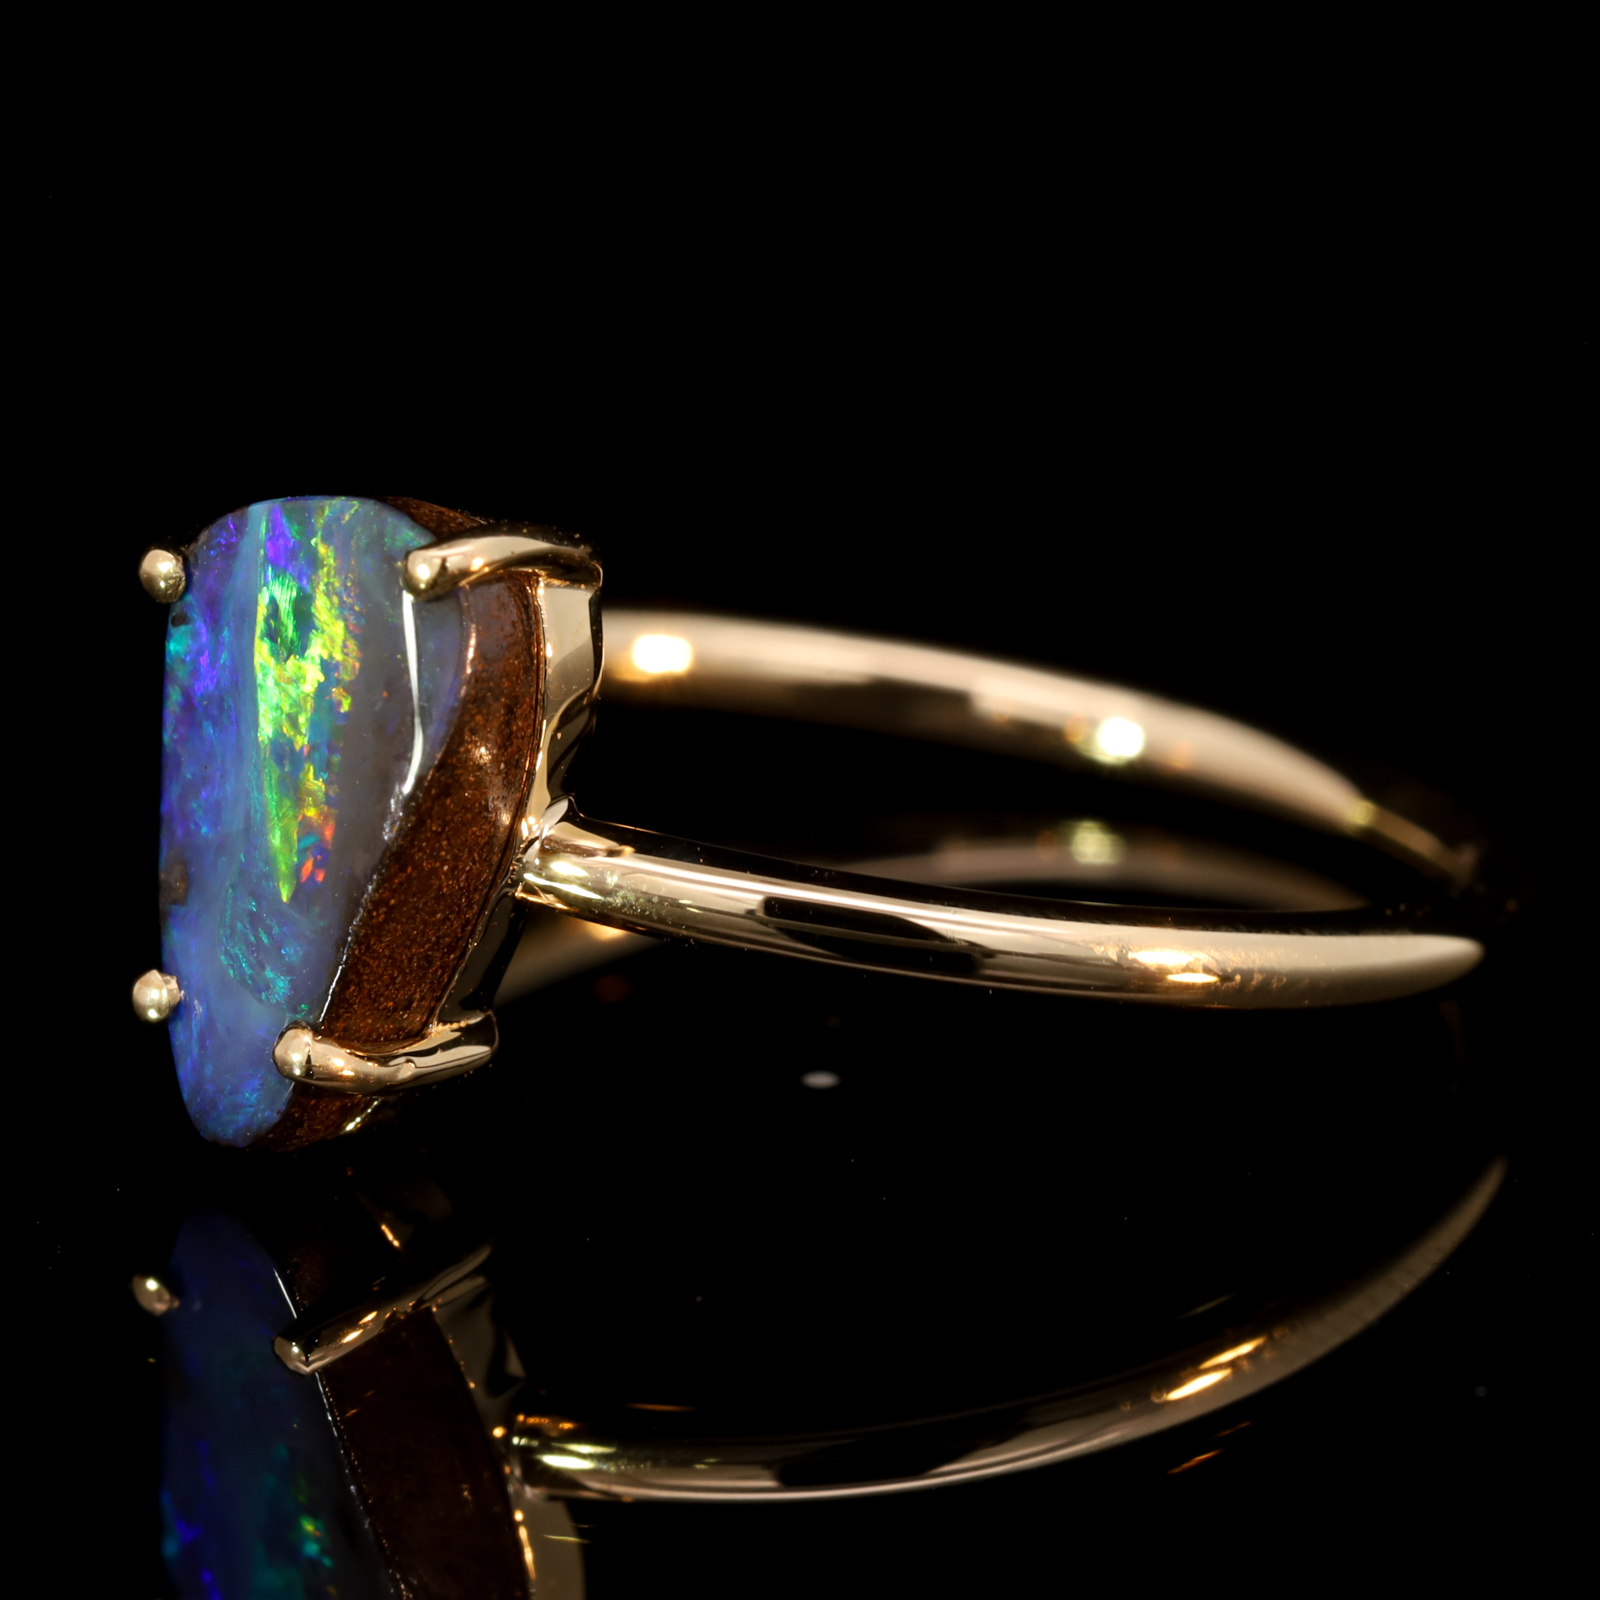 Yellow Gold Blue Green Yellow Orange Solid Australian Boulder Opal Ring